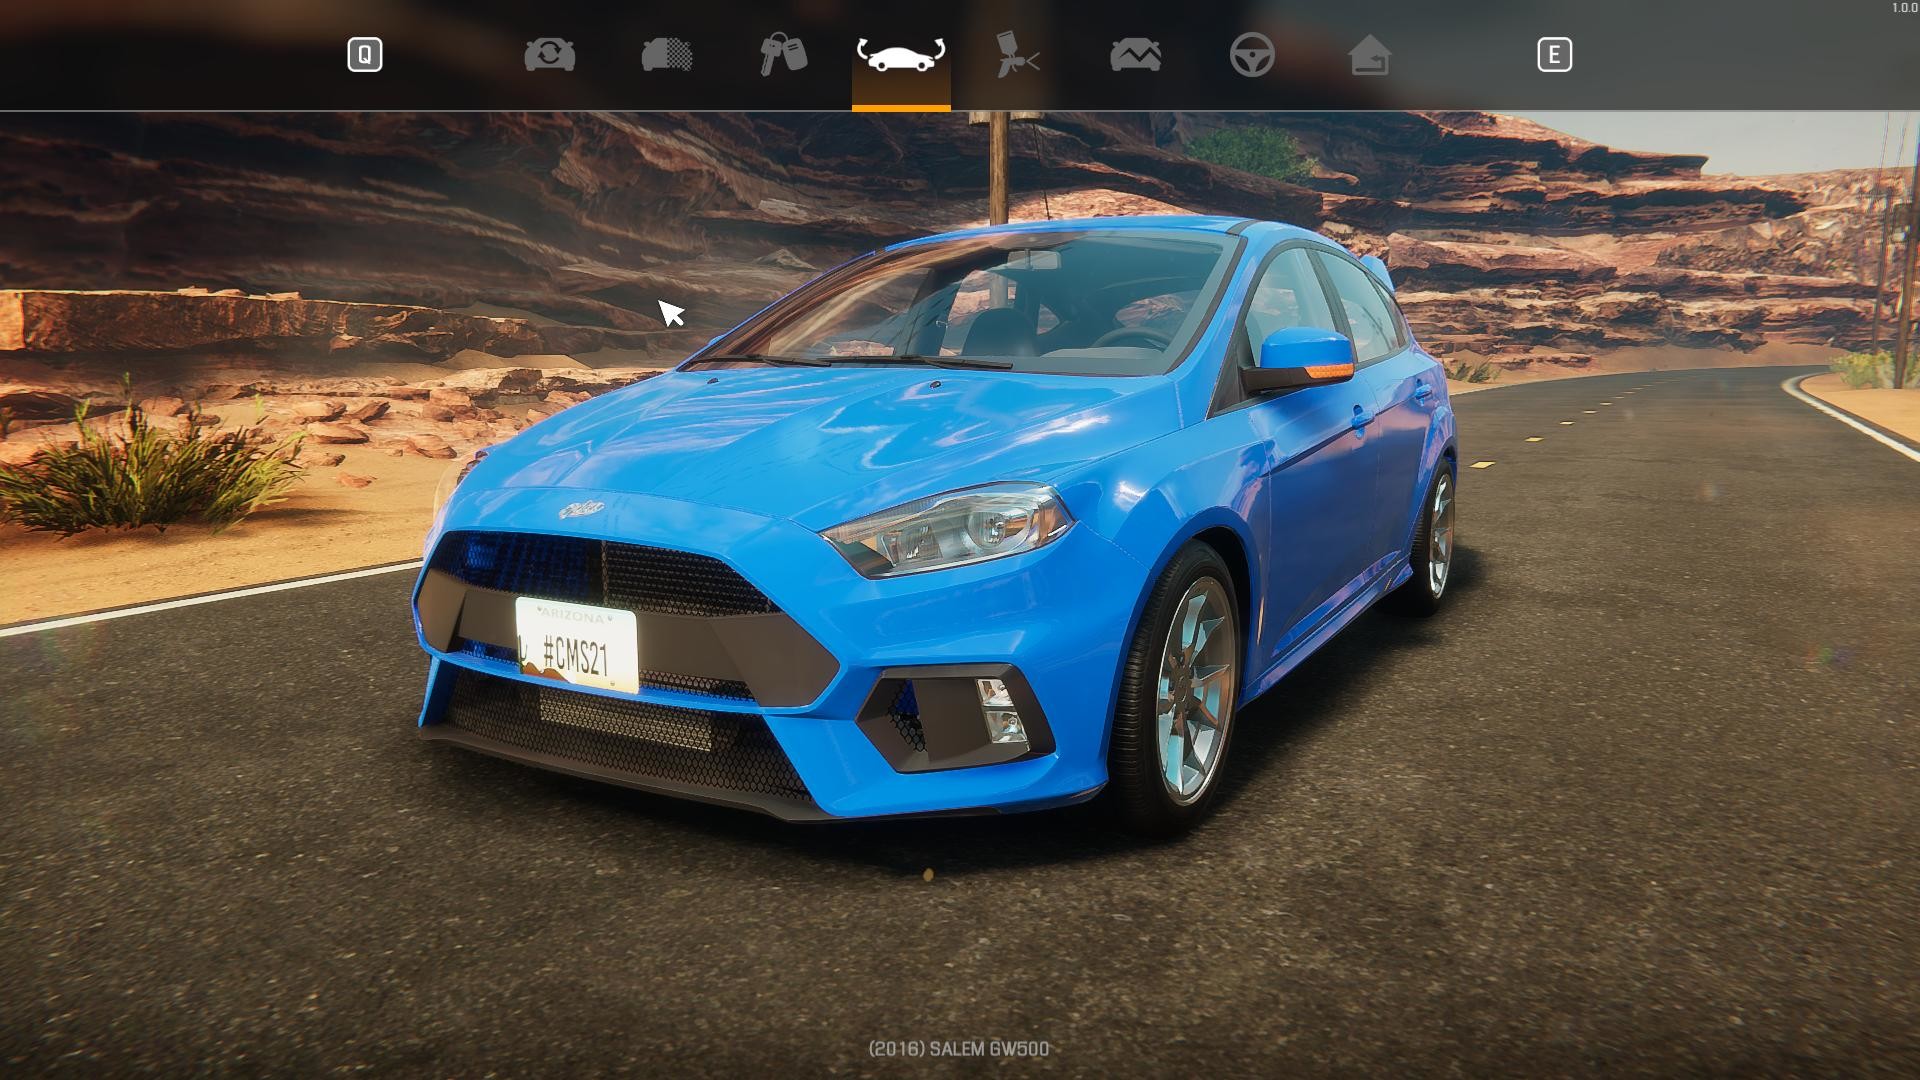 Car Mechanic Simulator 2021 - Platinum Edition Steam Account